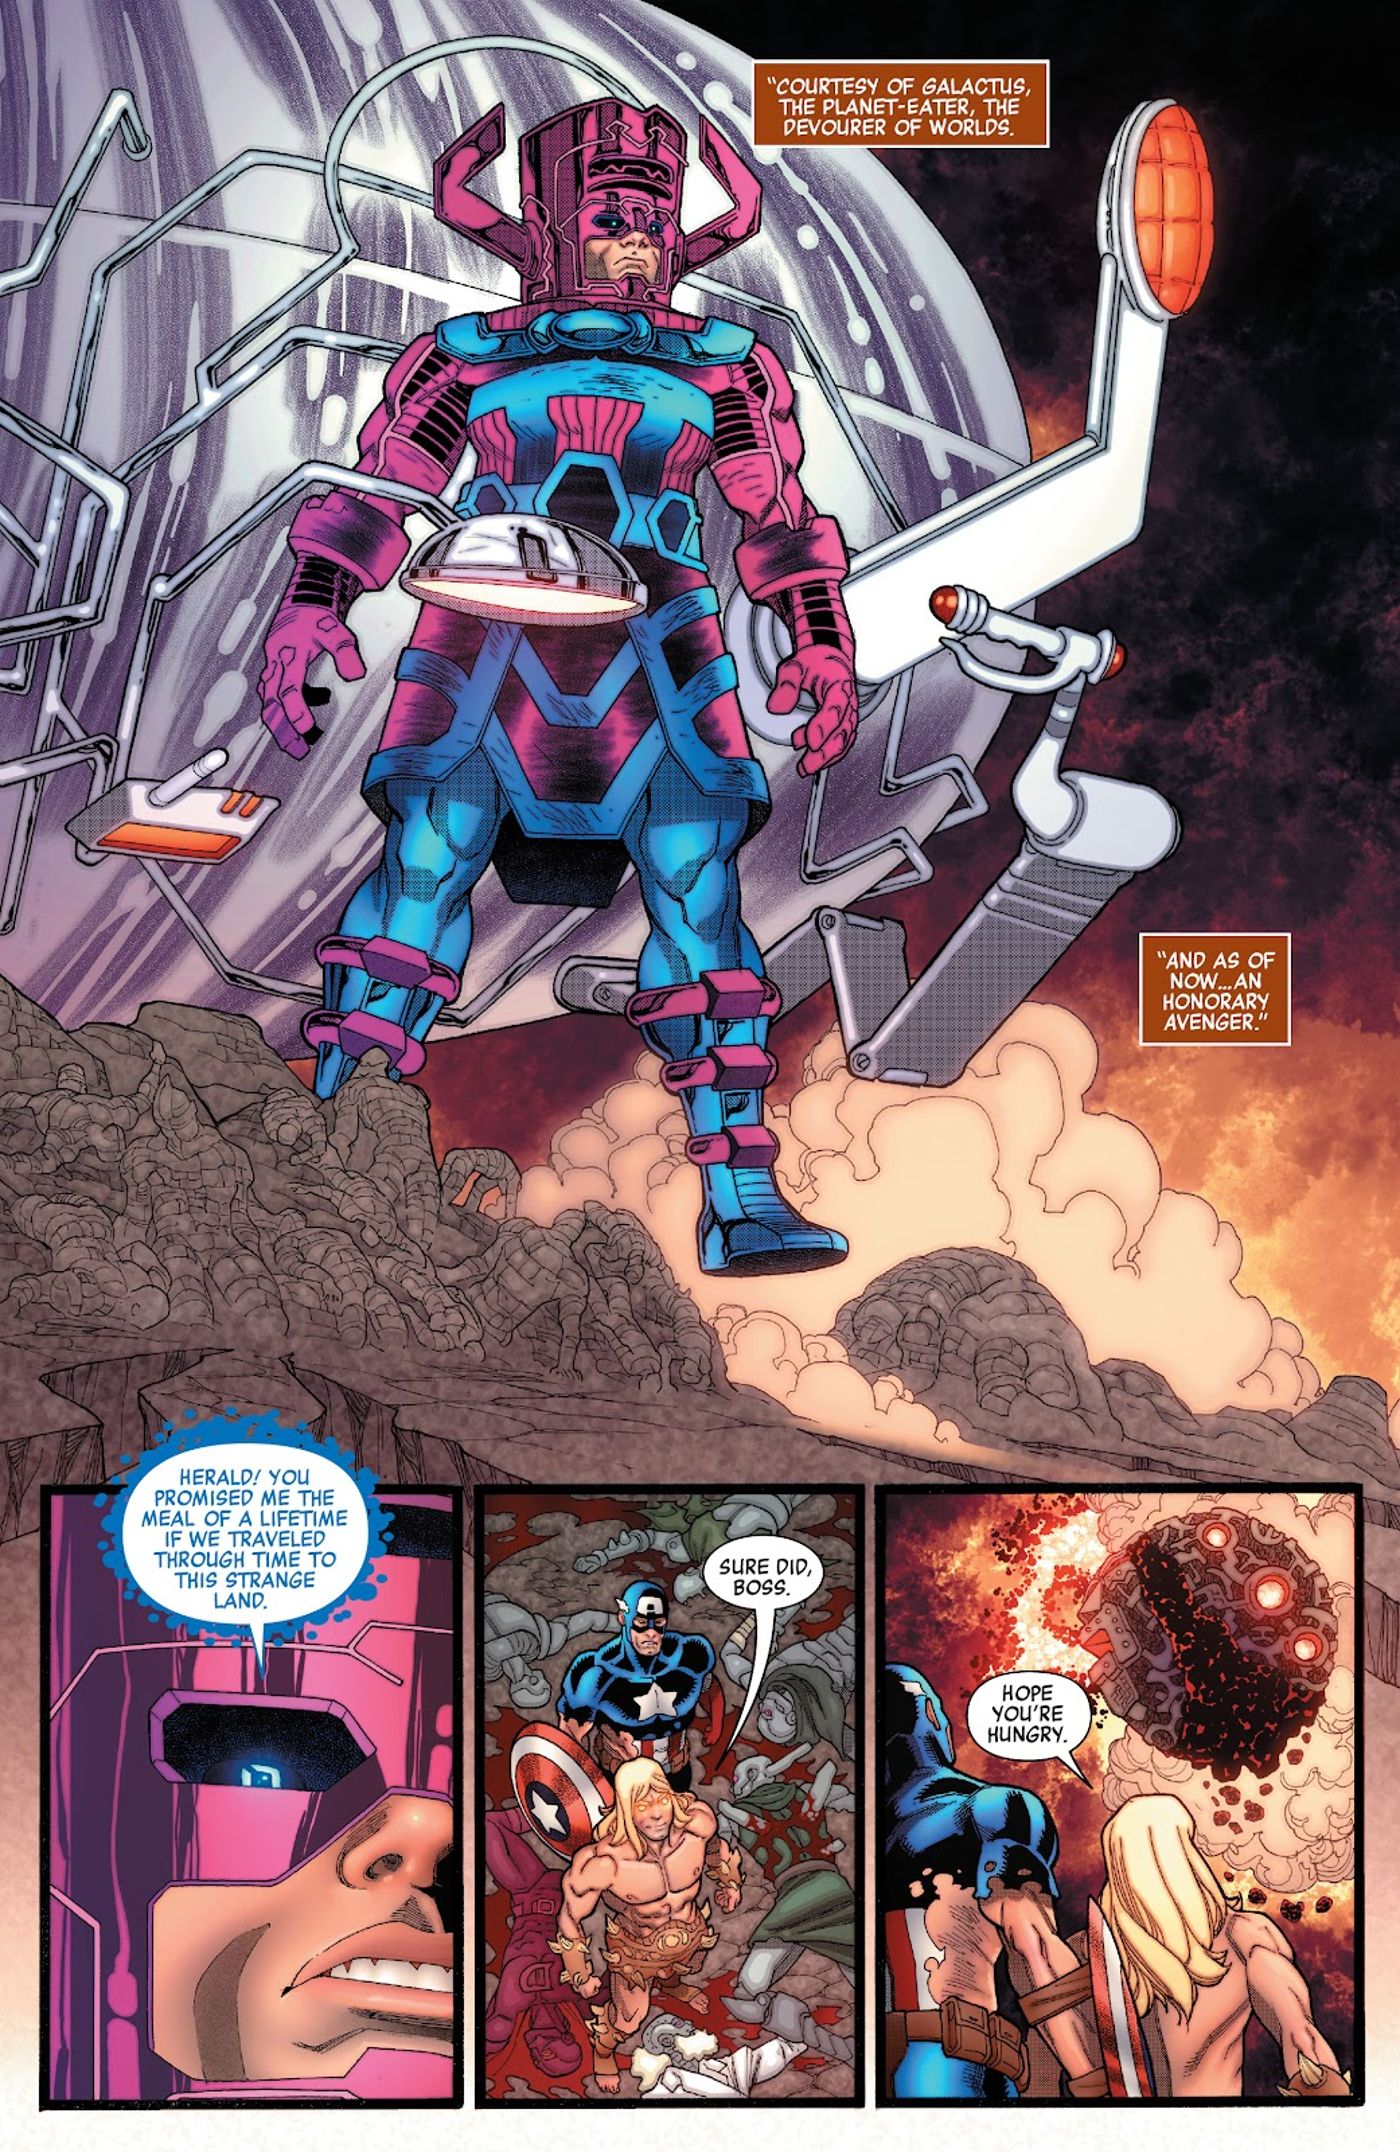 Galactus becomes an honorary Avenger